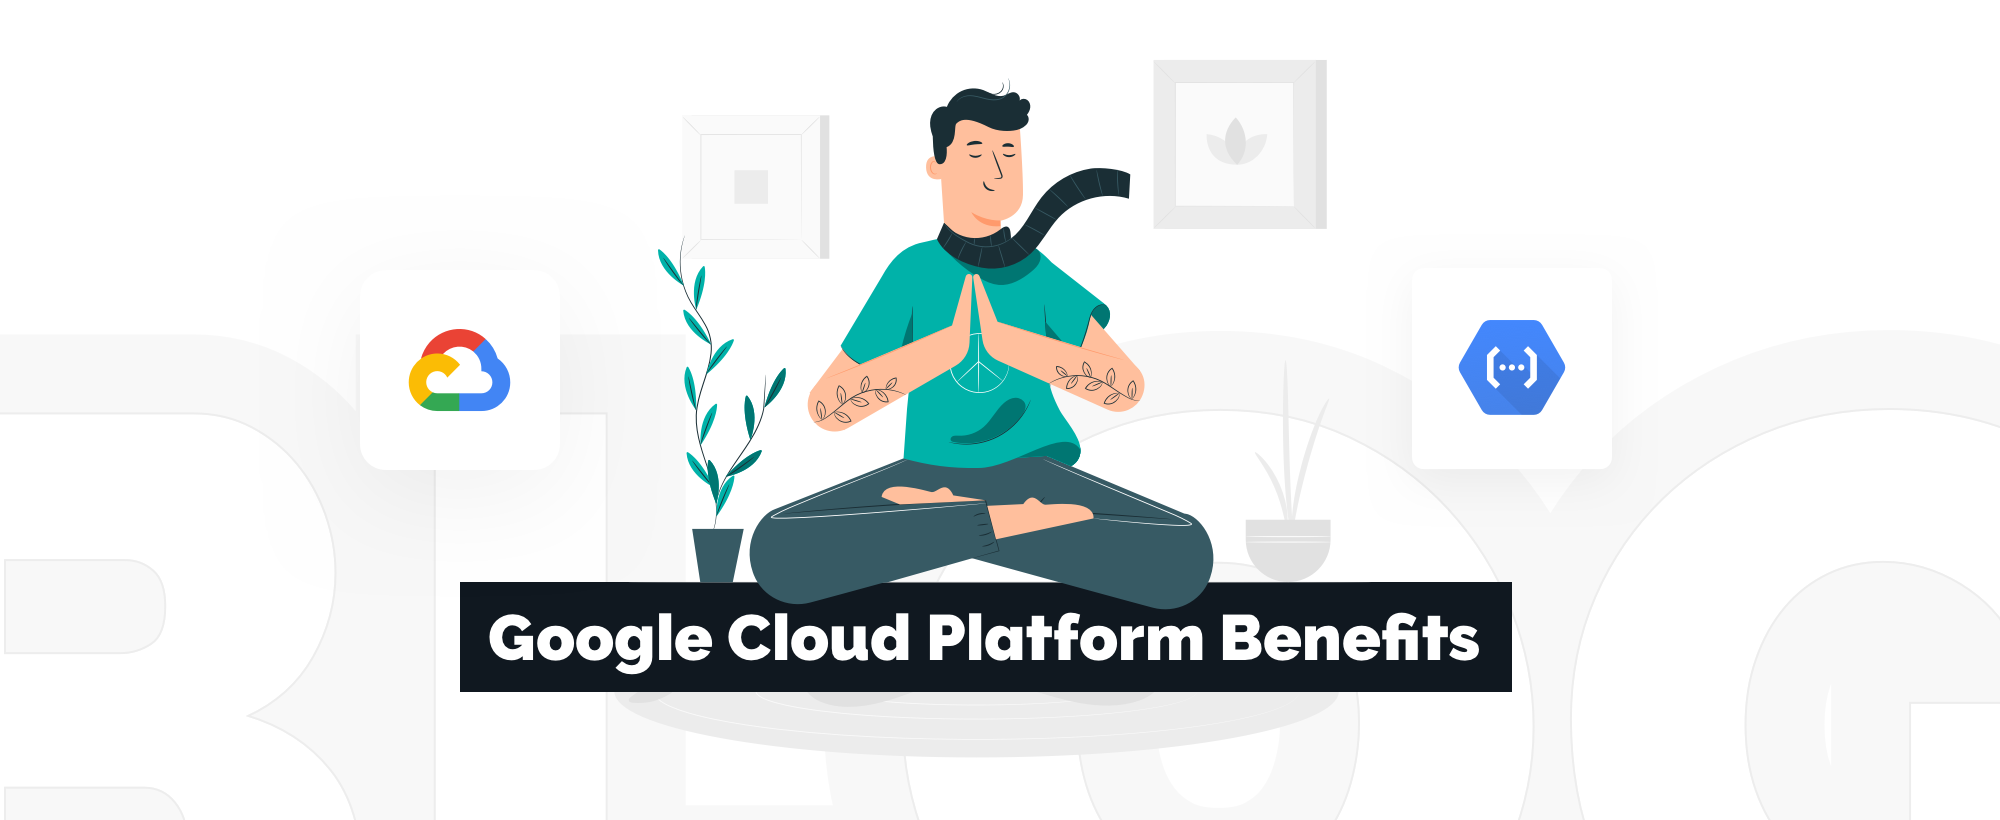 5 Benefits to use Google Cloud Platform for App Development